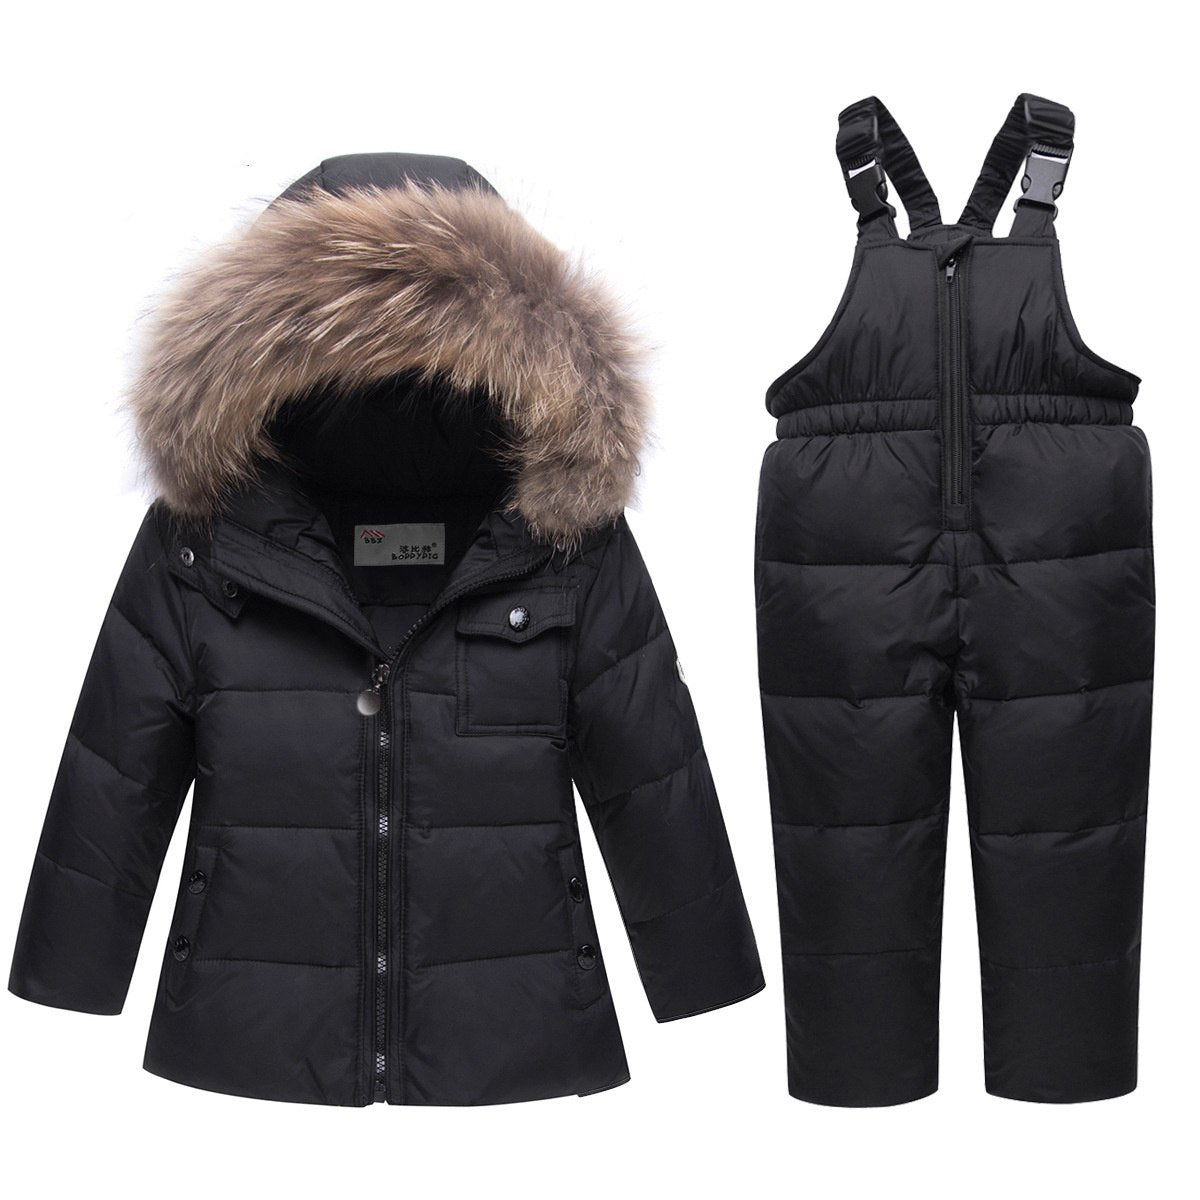 New Clothing Sets Infant Baby boy girl clothes Winter Coat Snowsuit Du ...